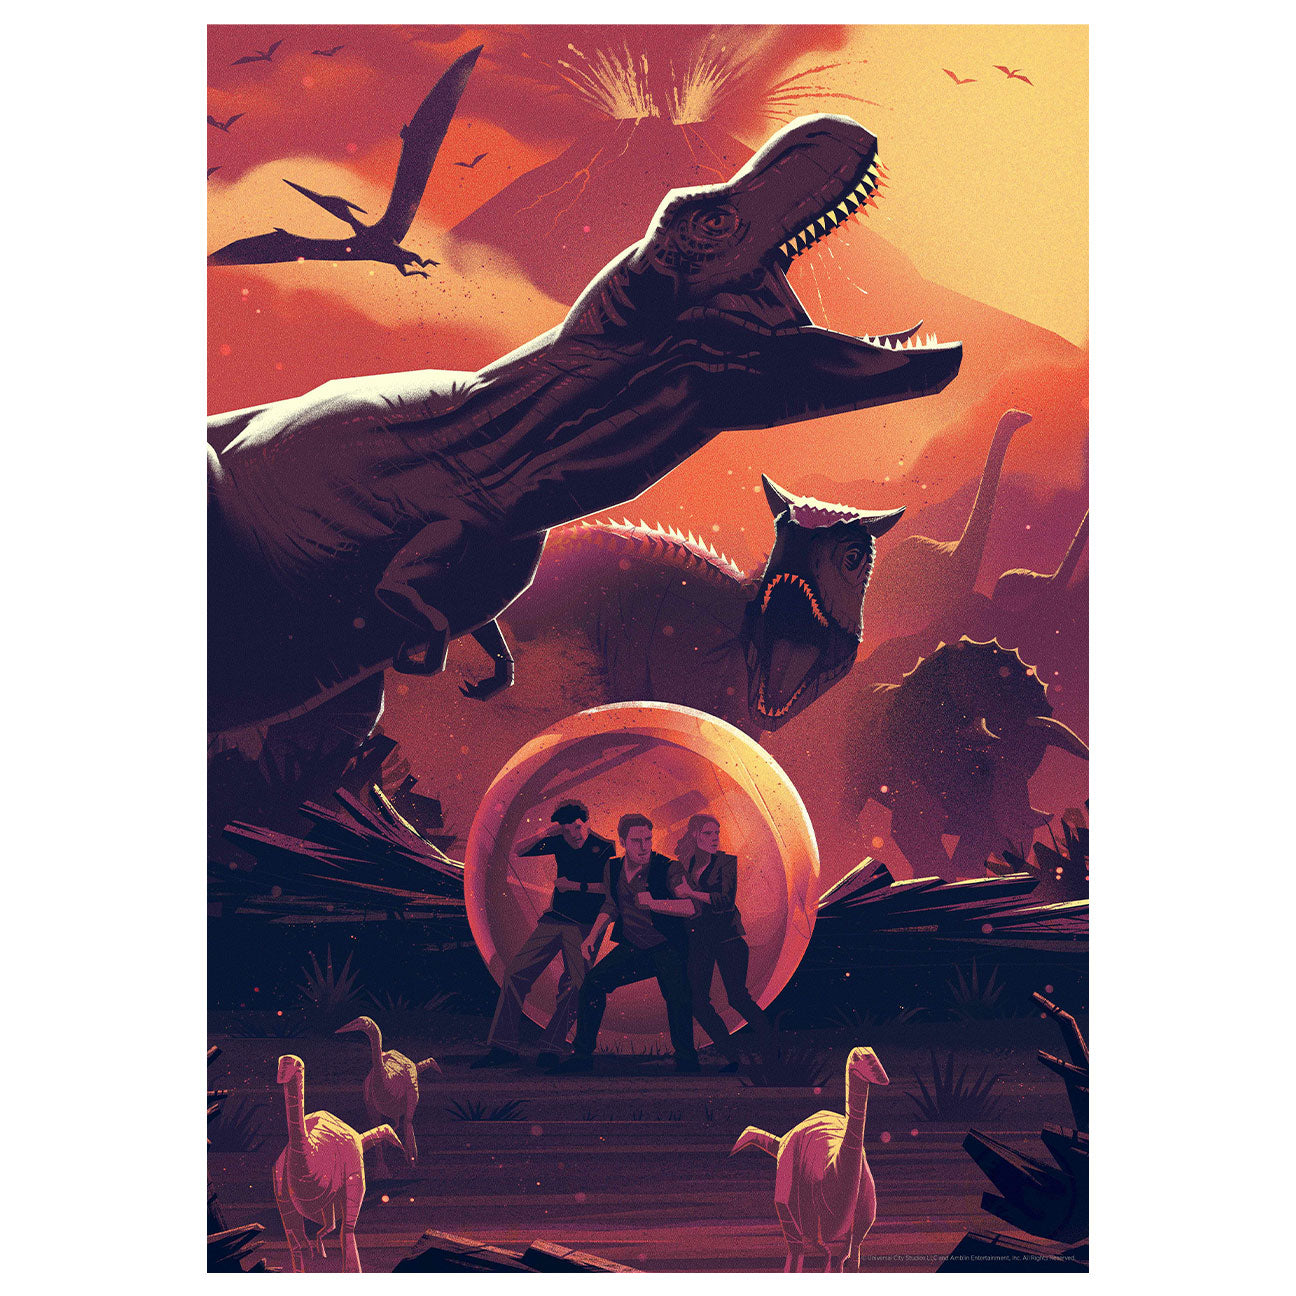 Jurassic World Limited Edition Art Print